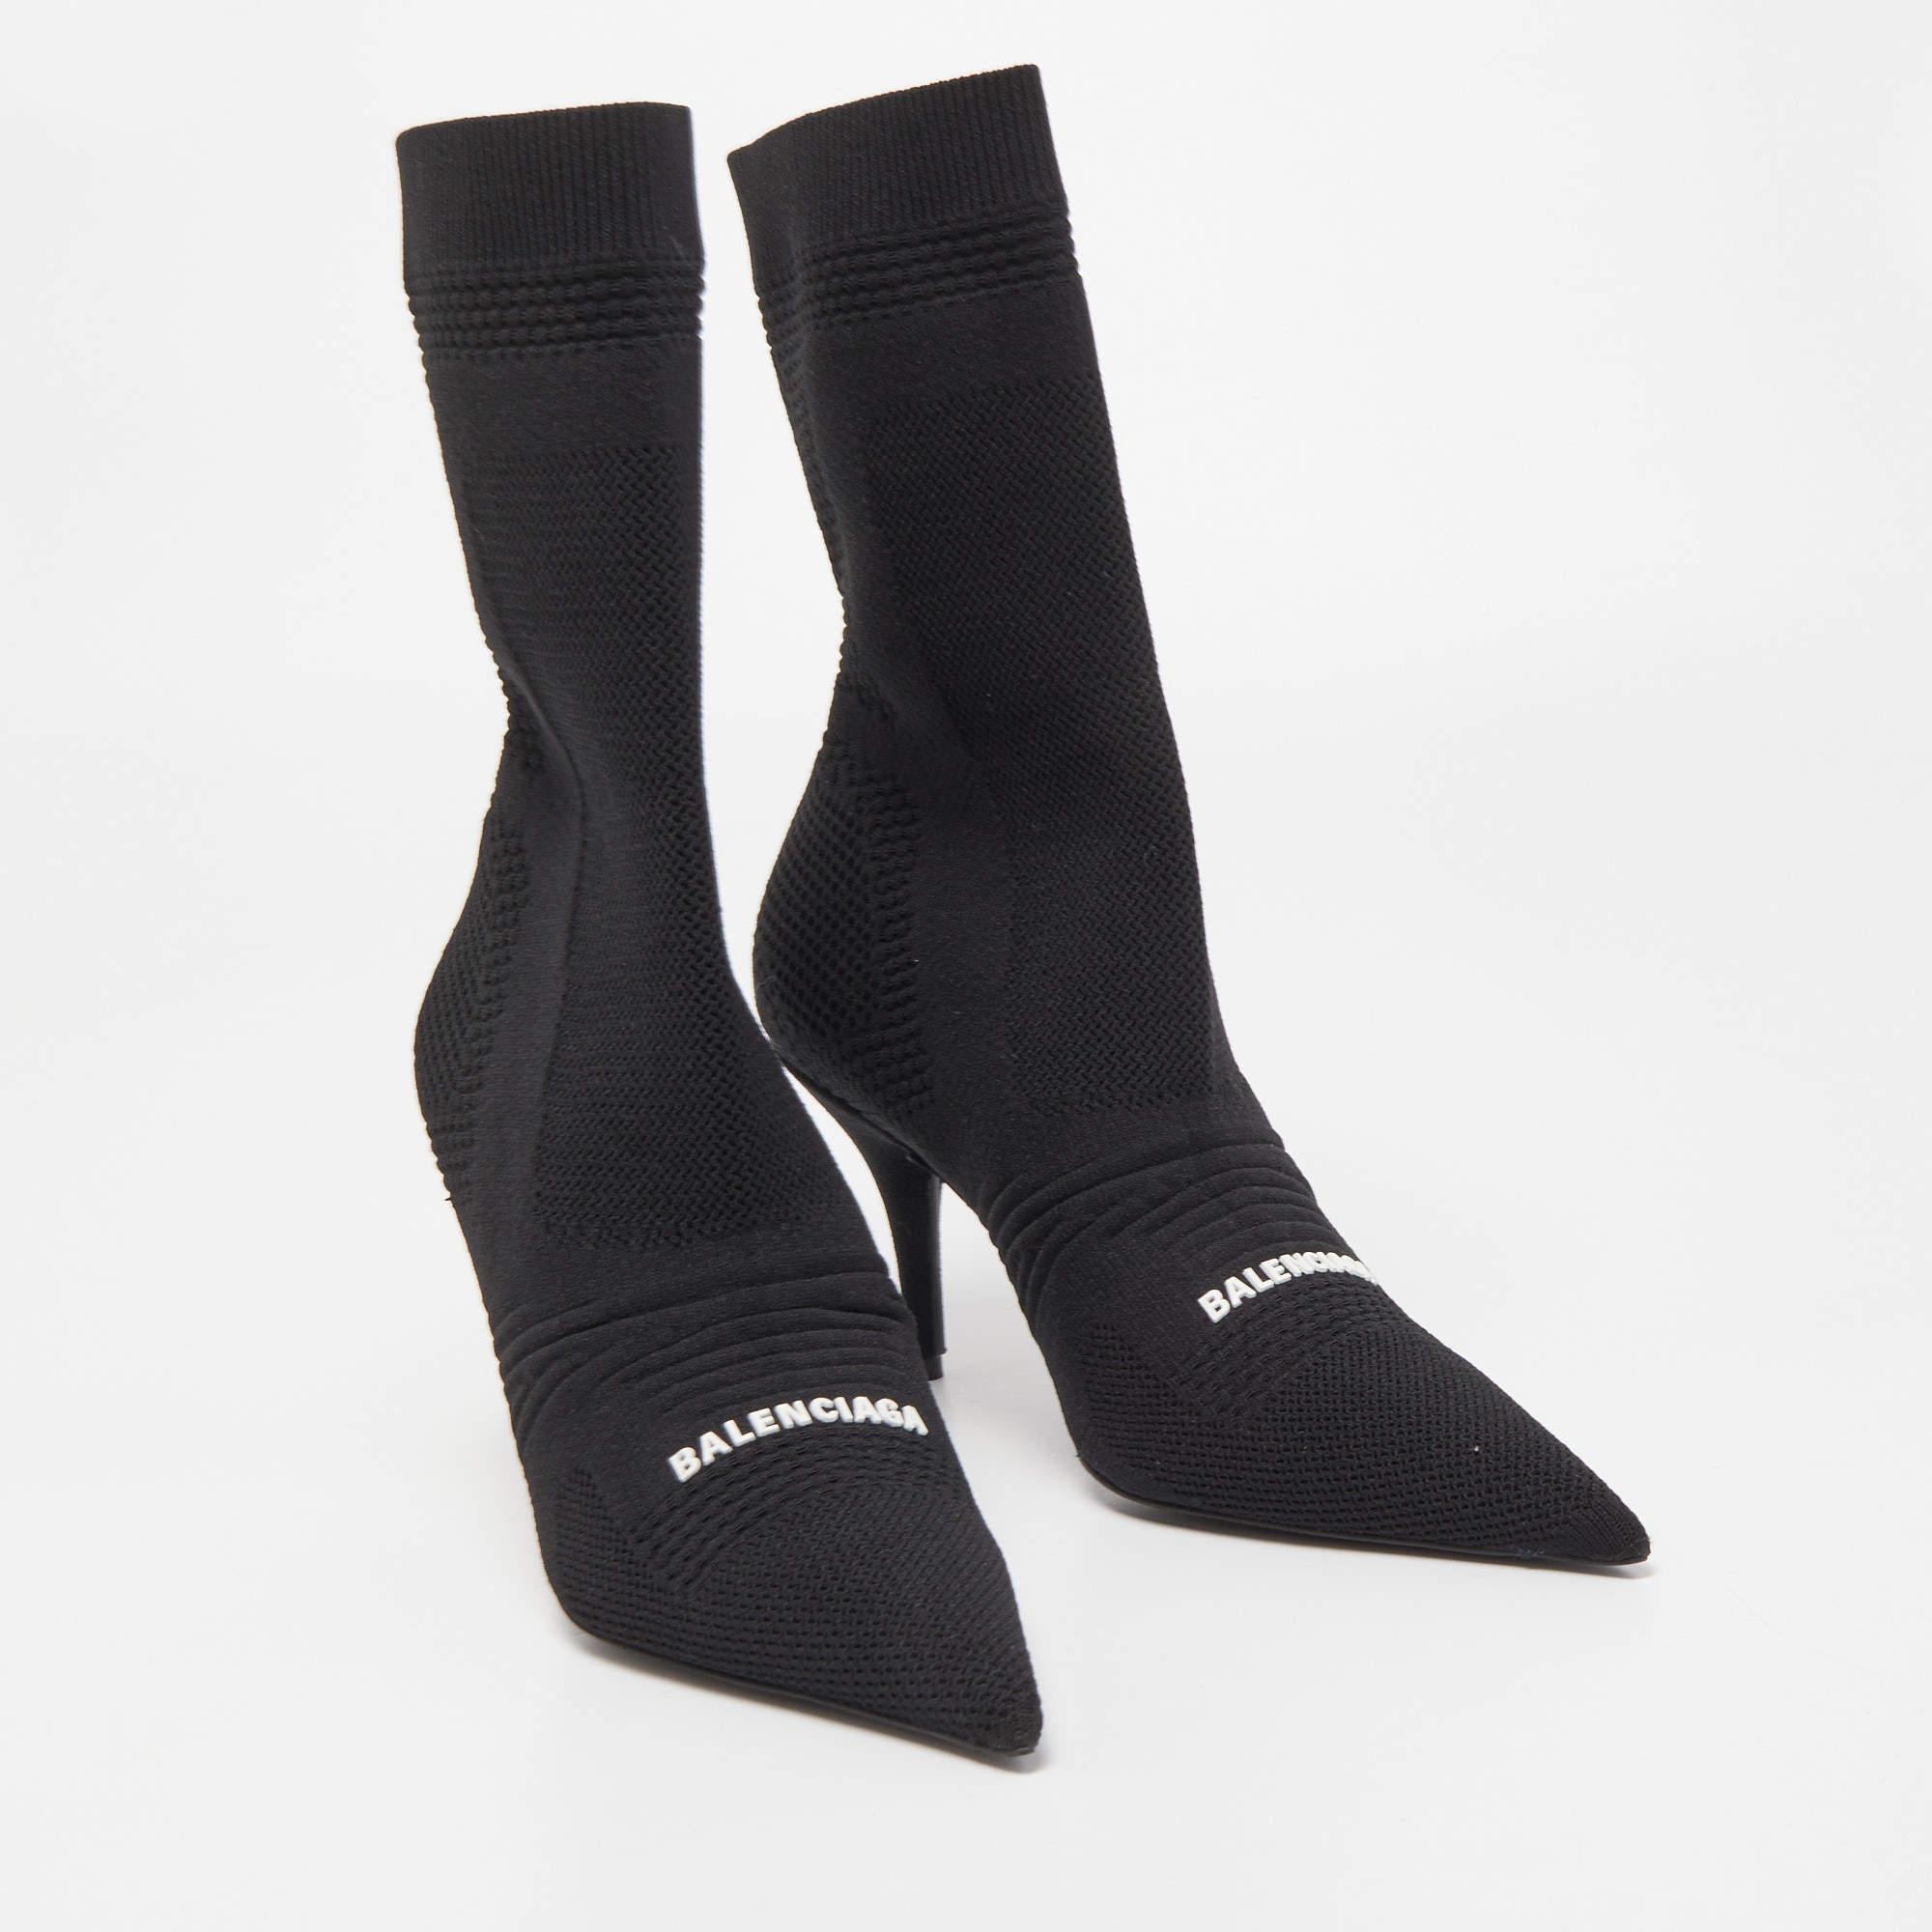 Balenciaga Black Knit Fabric Knife Ankle Socks Booties Size 38 1